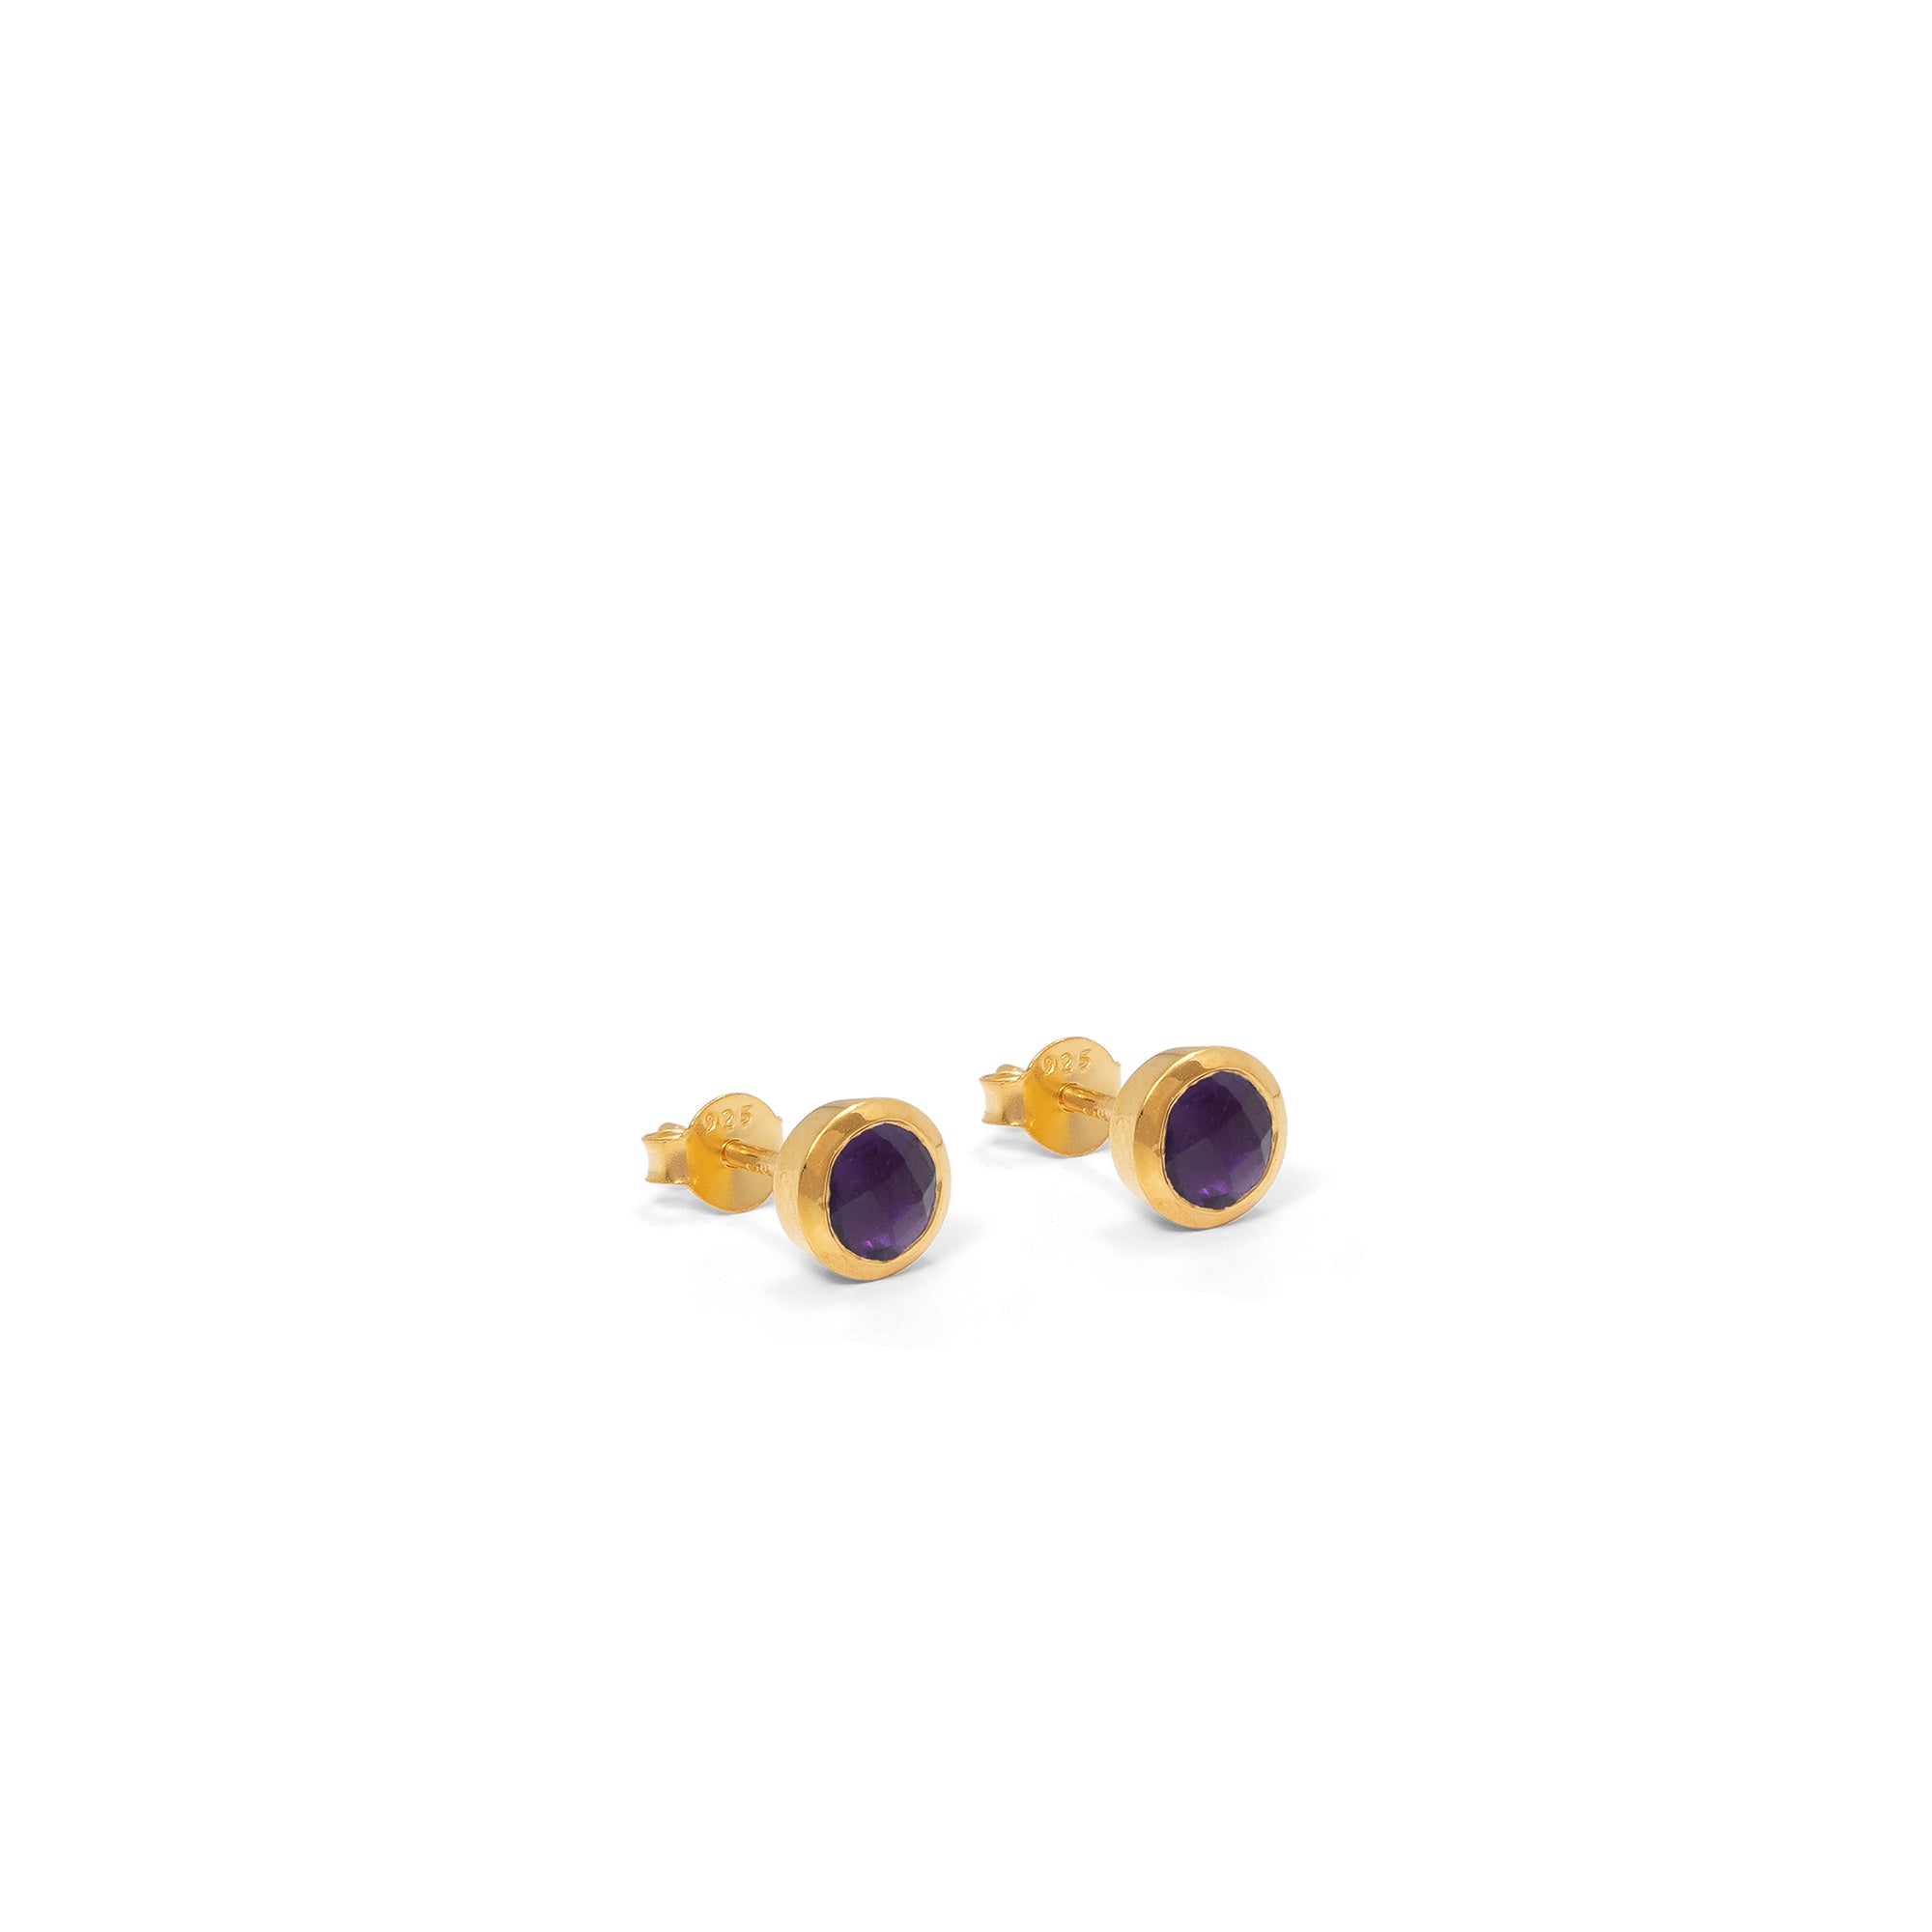 Birthstone Stud Earrings February: Amethyst and Gold Vermeil